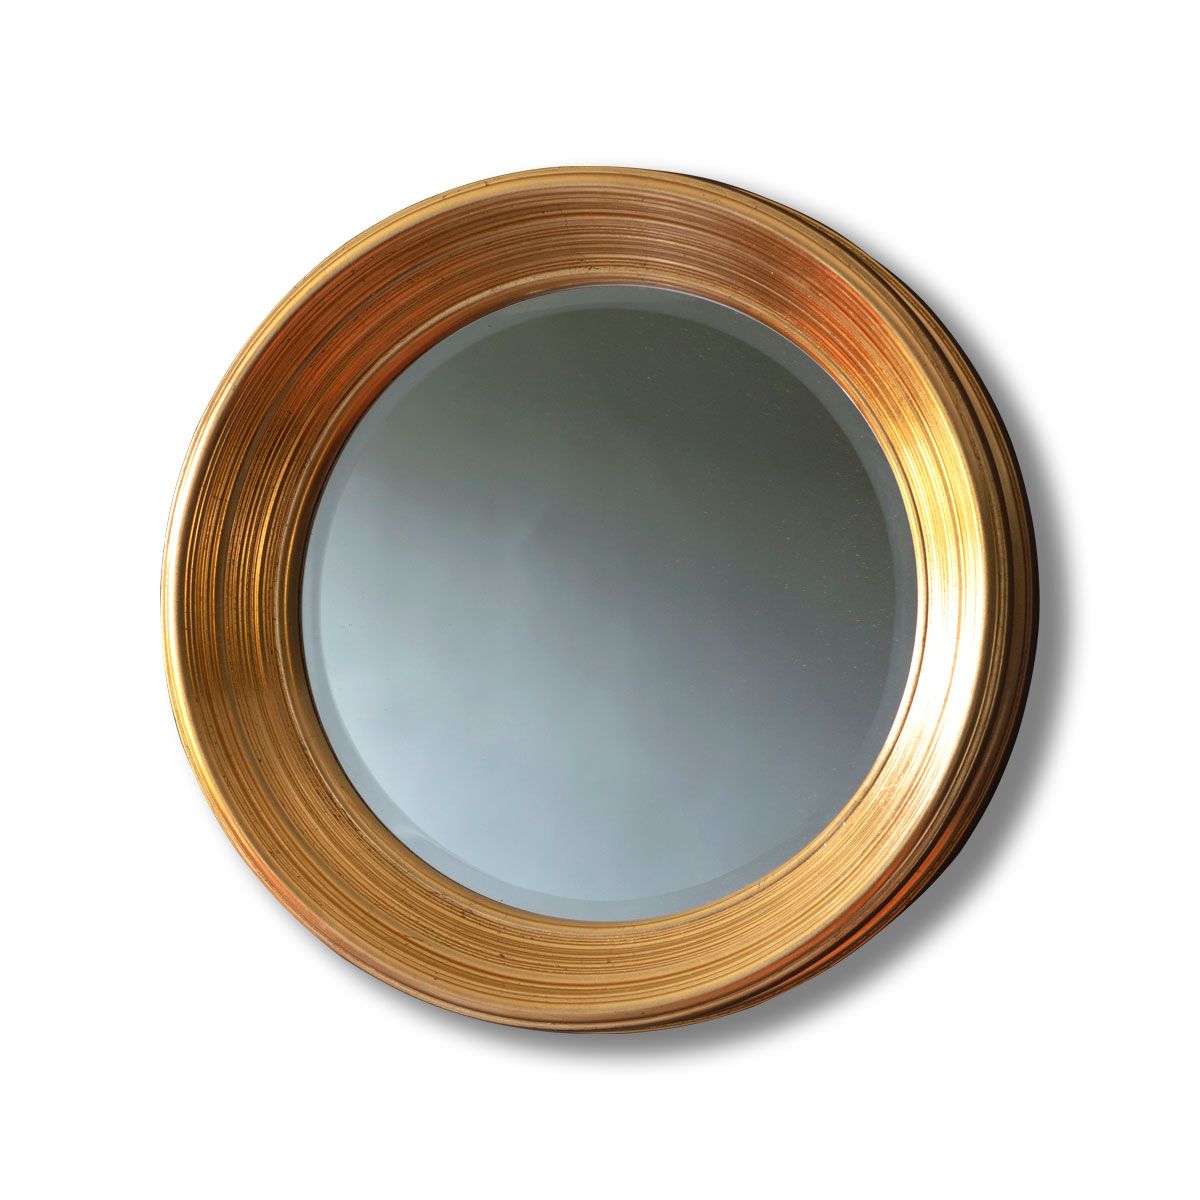 Chenille Gold Round Wall Mirror 65cm X 65cm | Luxe Mirrors Regarding Round 4 Section Wall Mirrors (View 13 of 15)